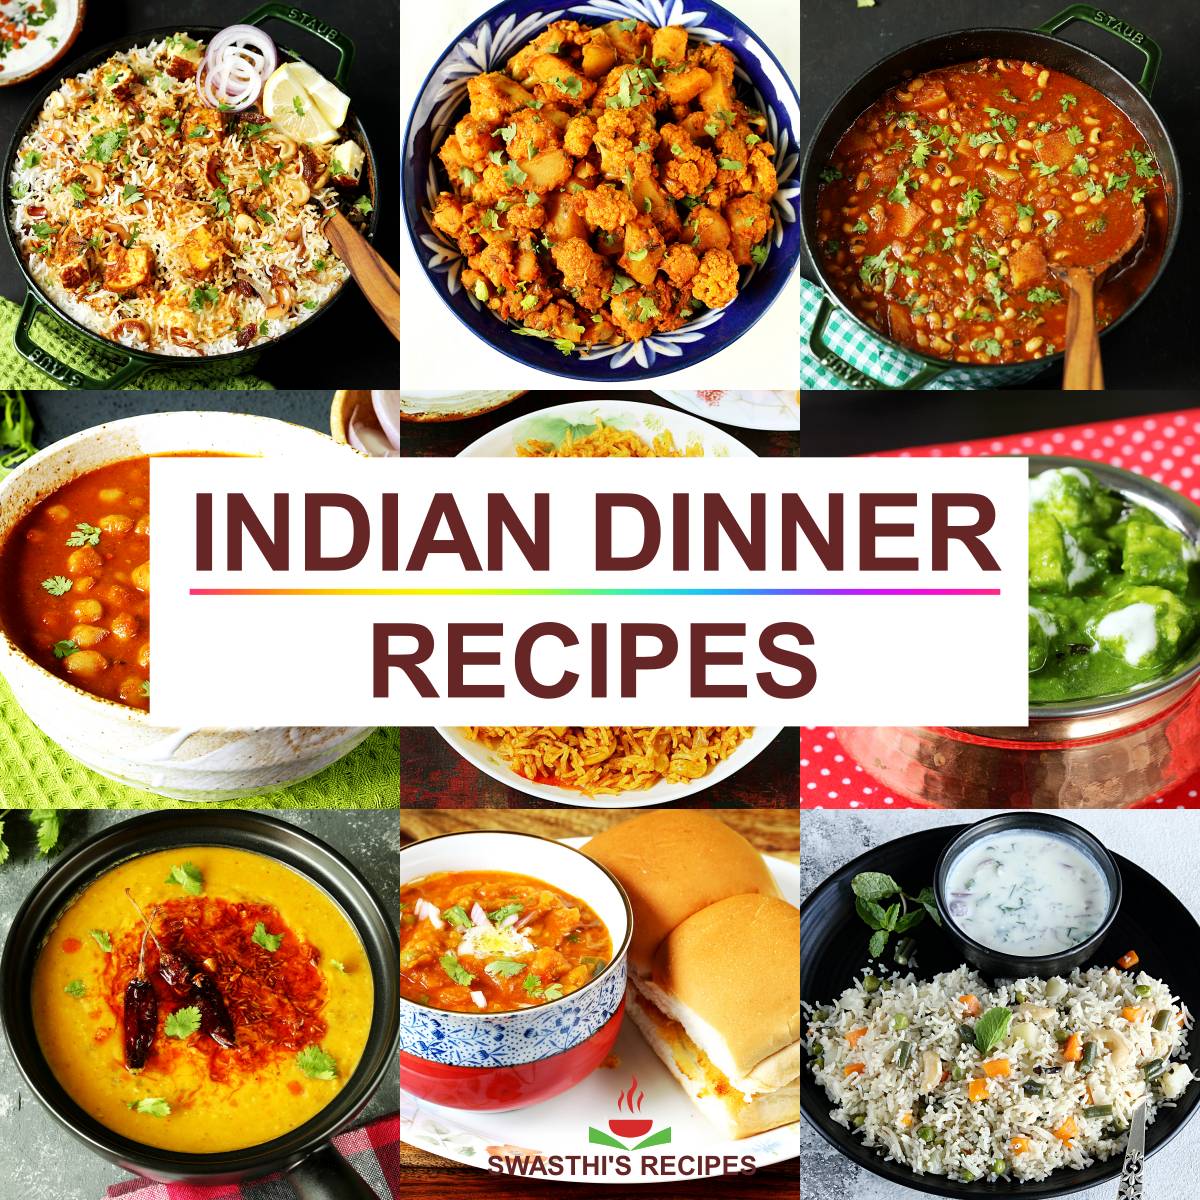 Indian dinner recipes & ideas